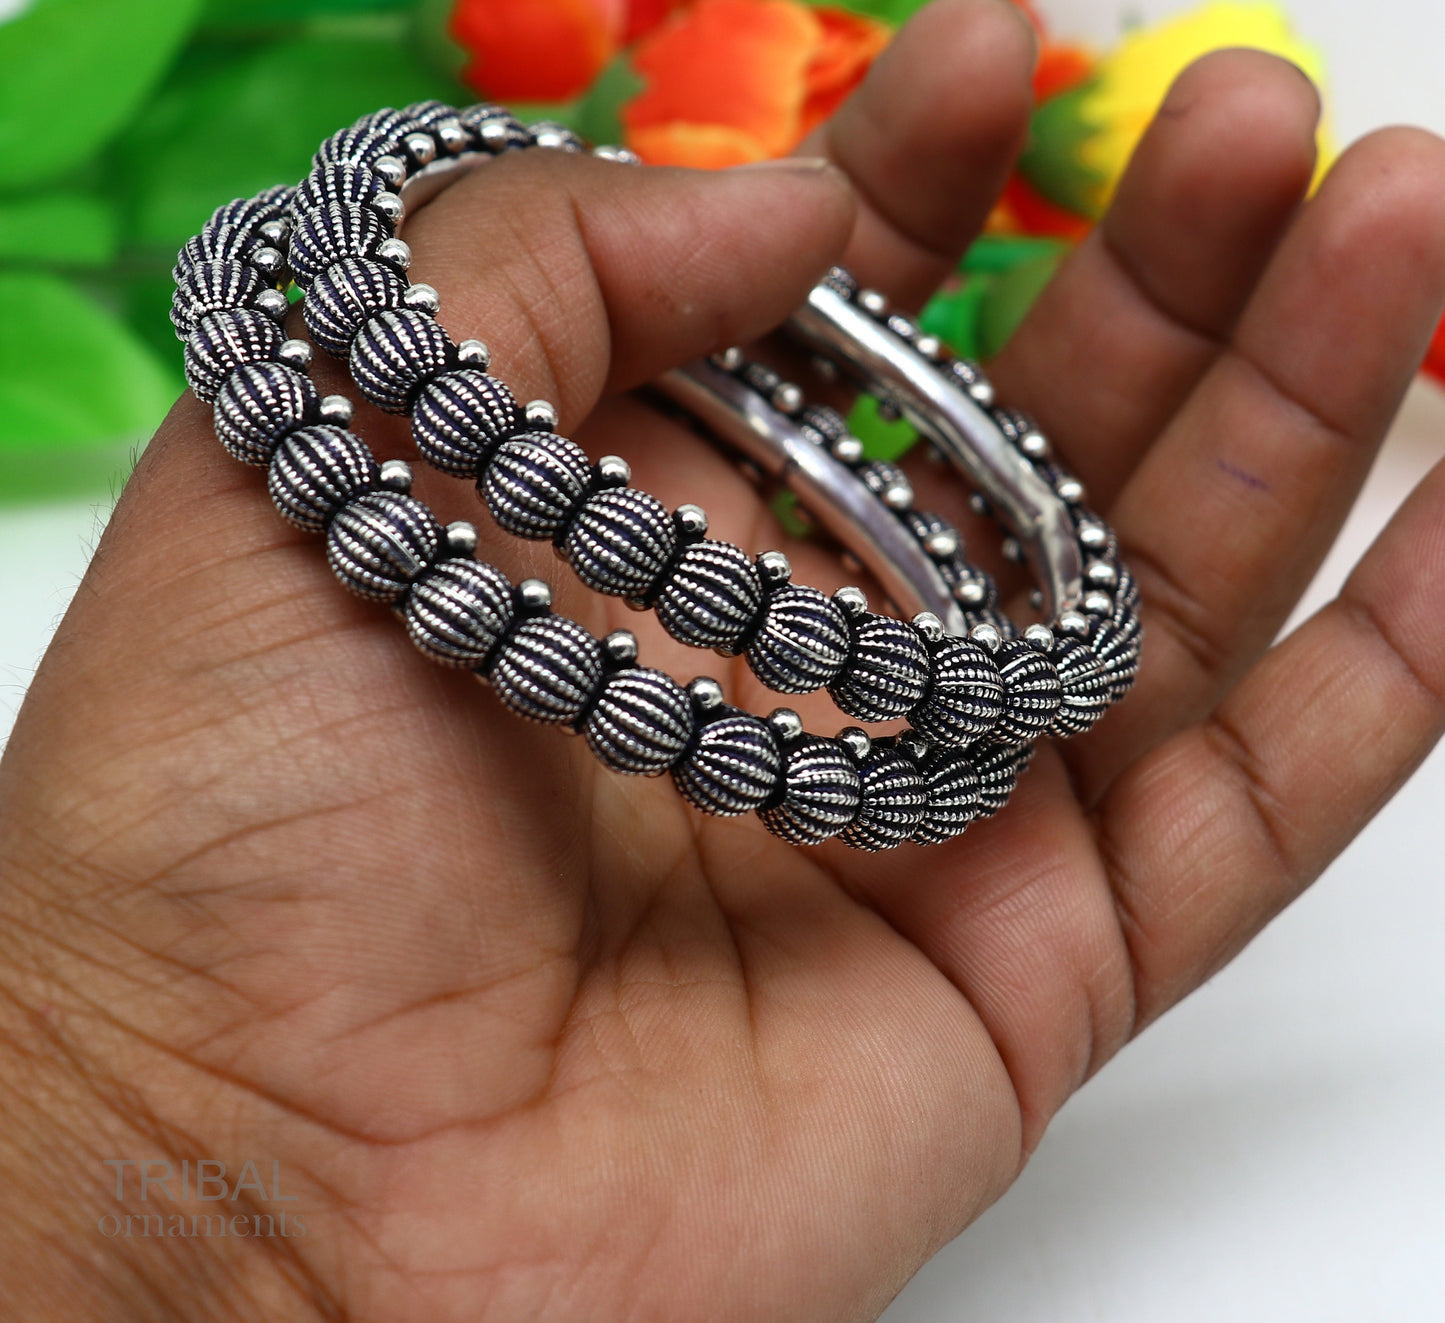 925 sterling silver handmade Indian vintage design bangle bracelet kada stunning stylish tribal brides jewelry gifting ethnic bangles ba121 - TRIBAL ORNAMENTS